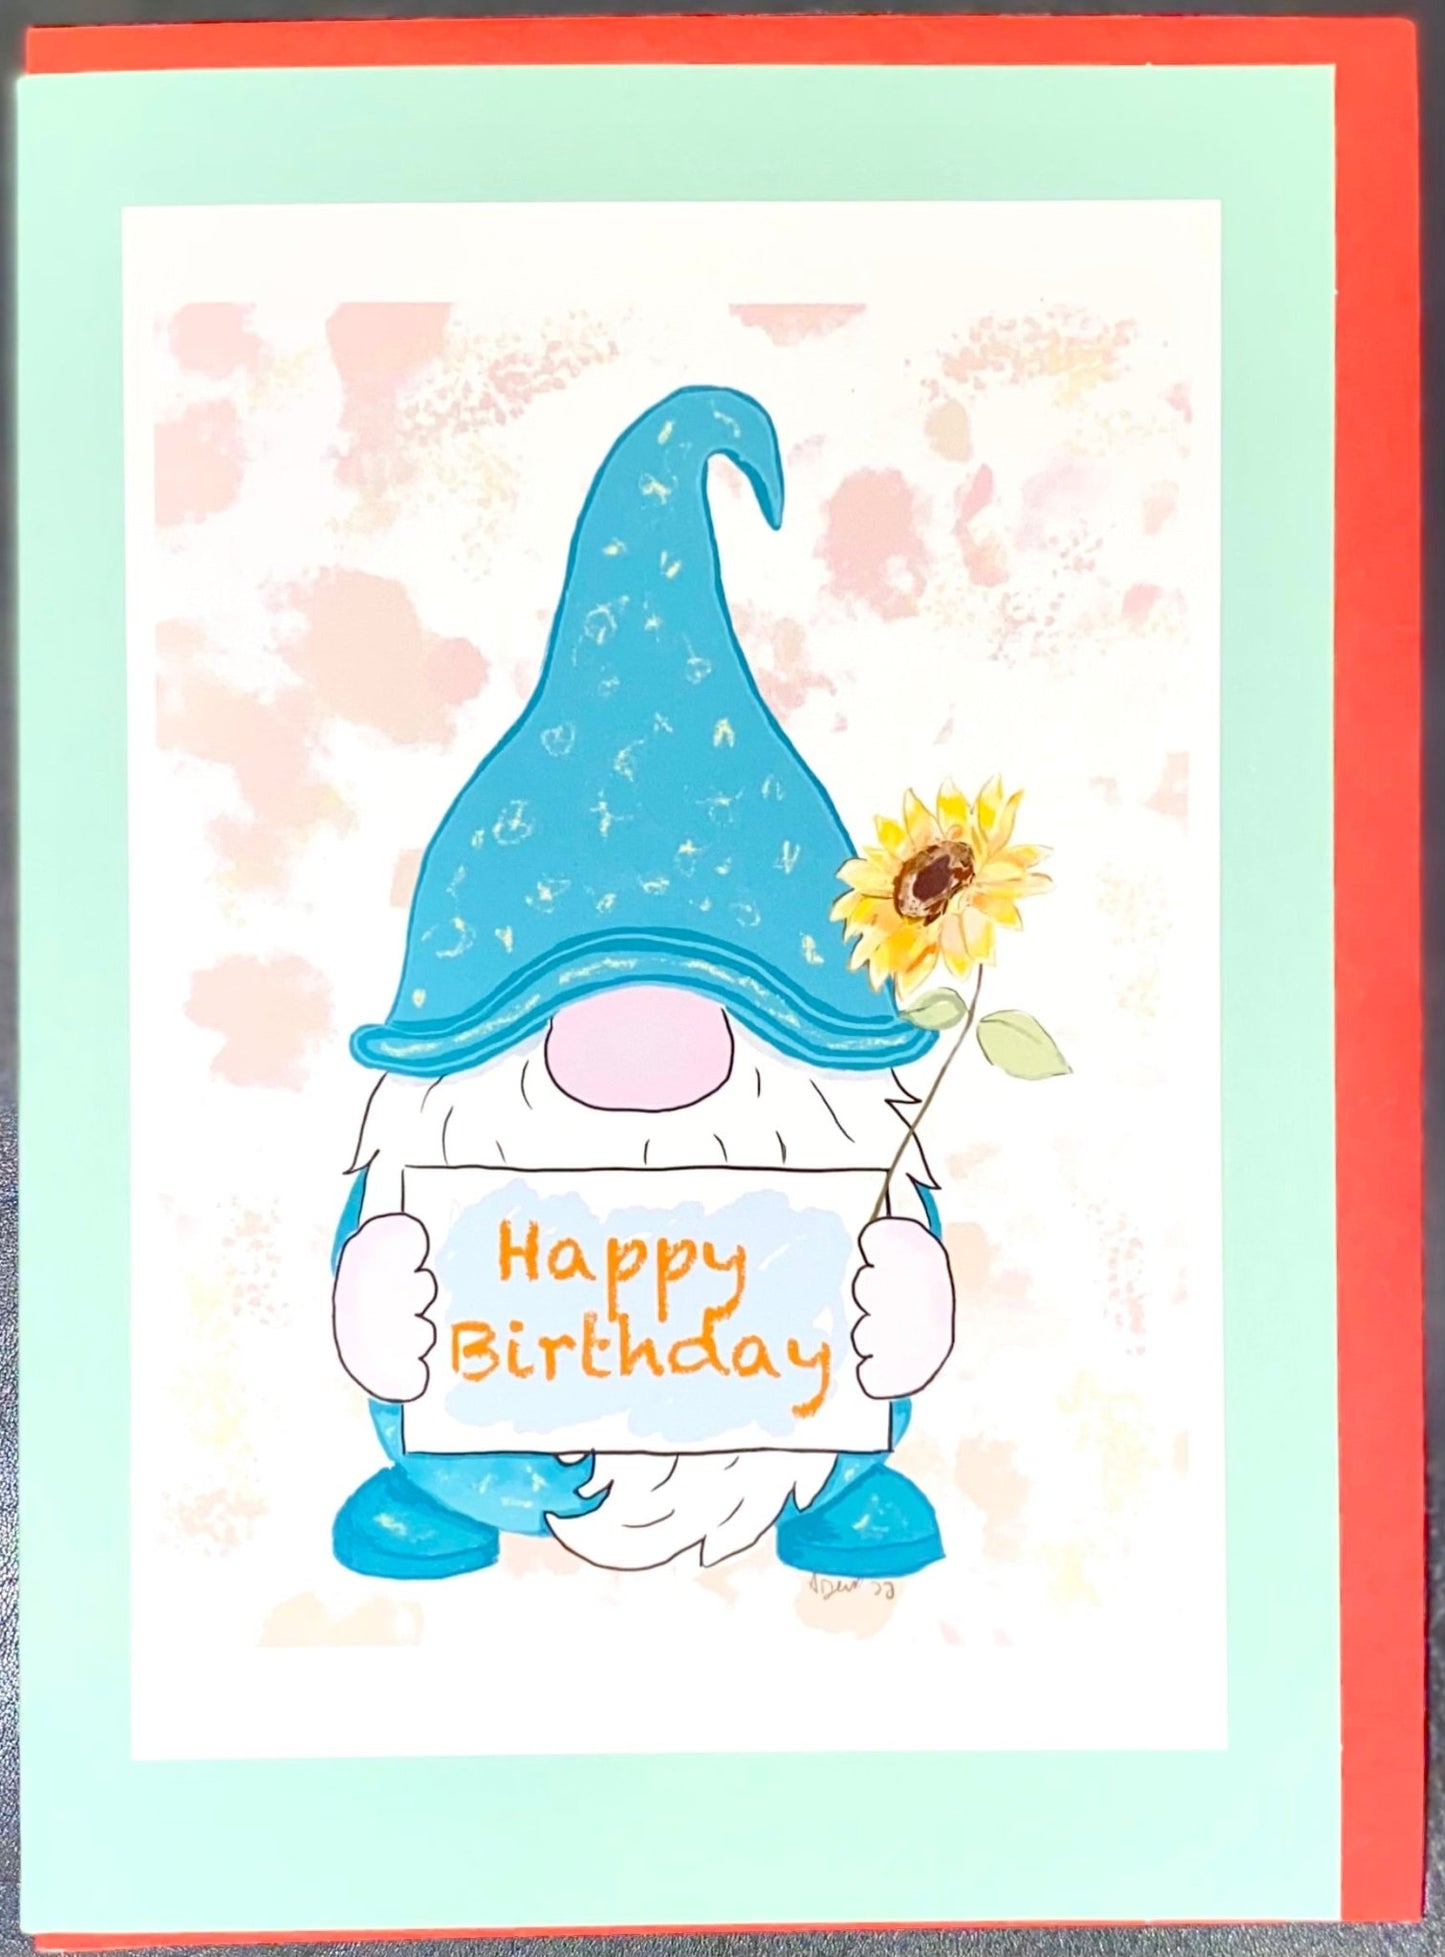 Gnome Birthday Greeting card - Blue Cava